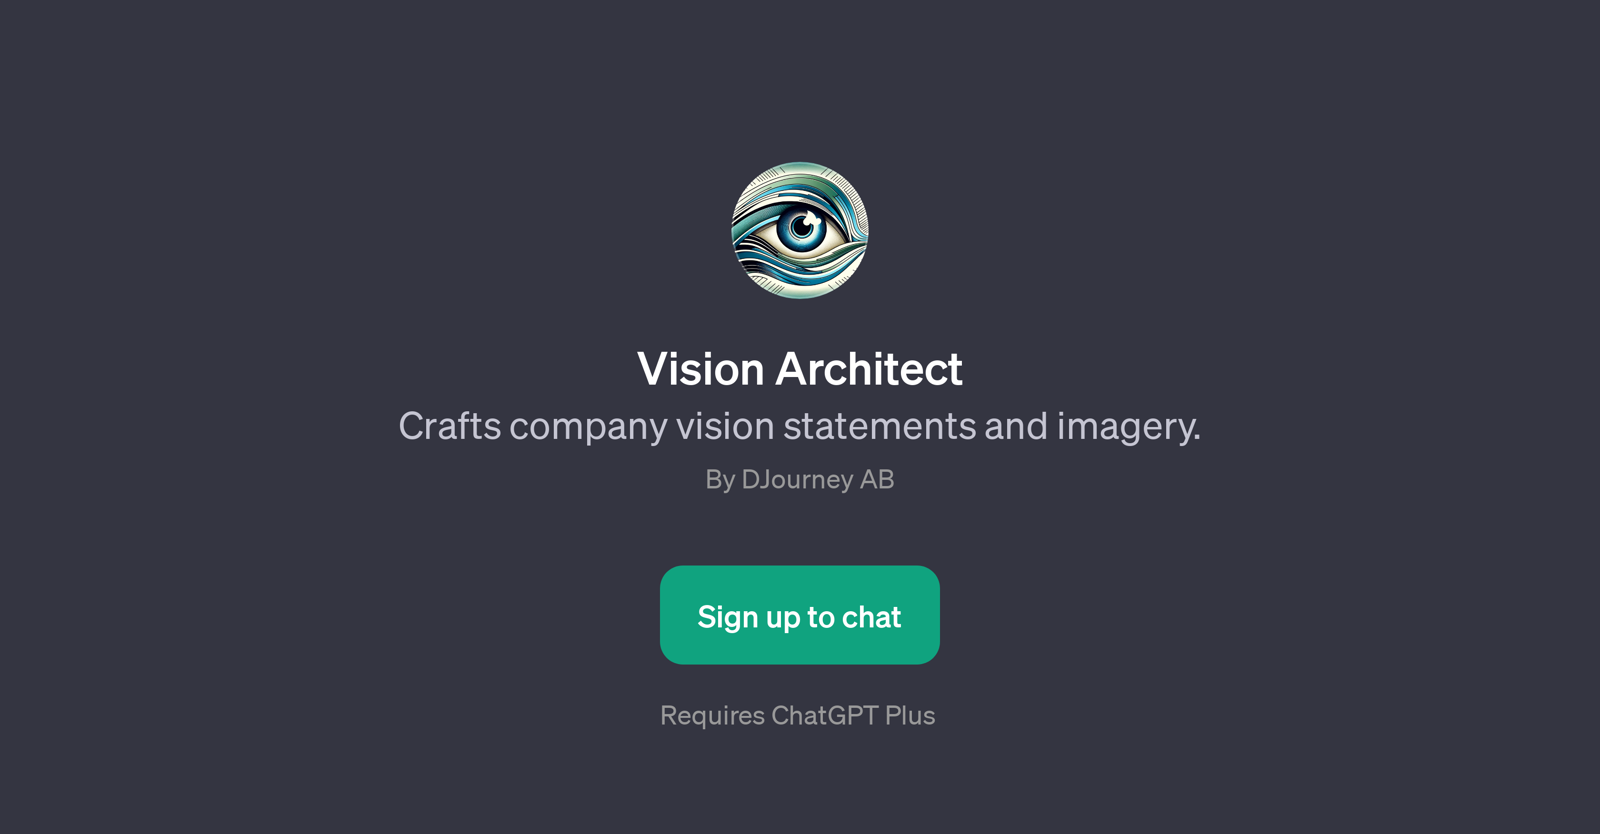 Vision Architect website